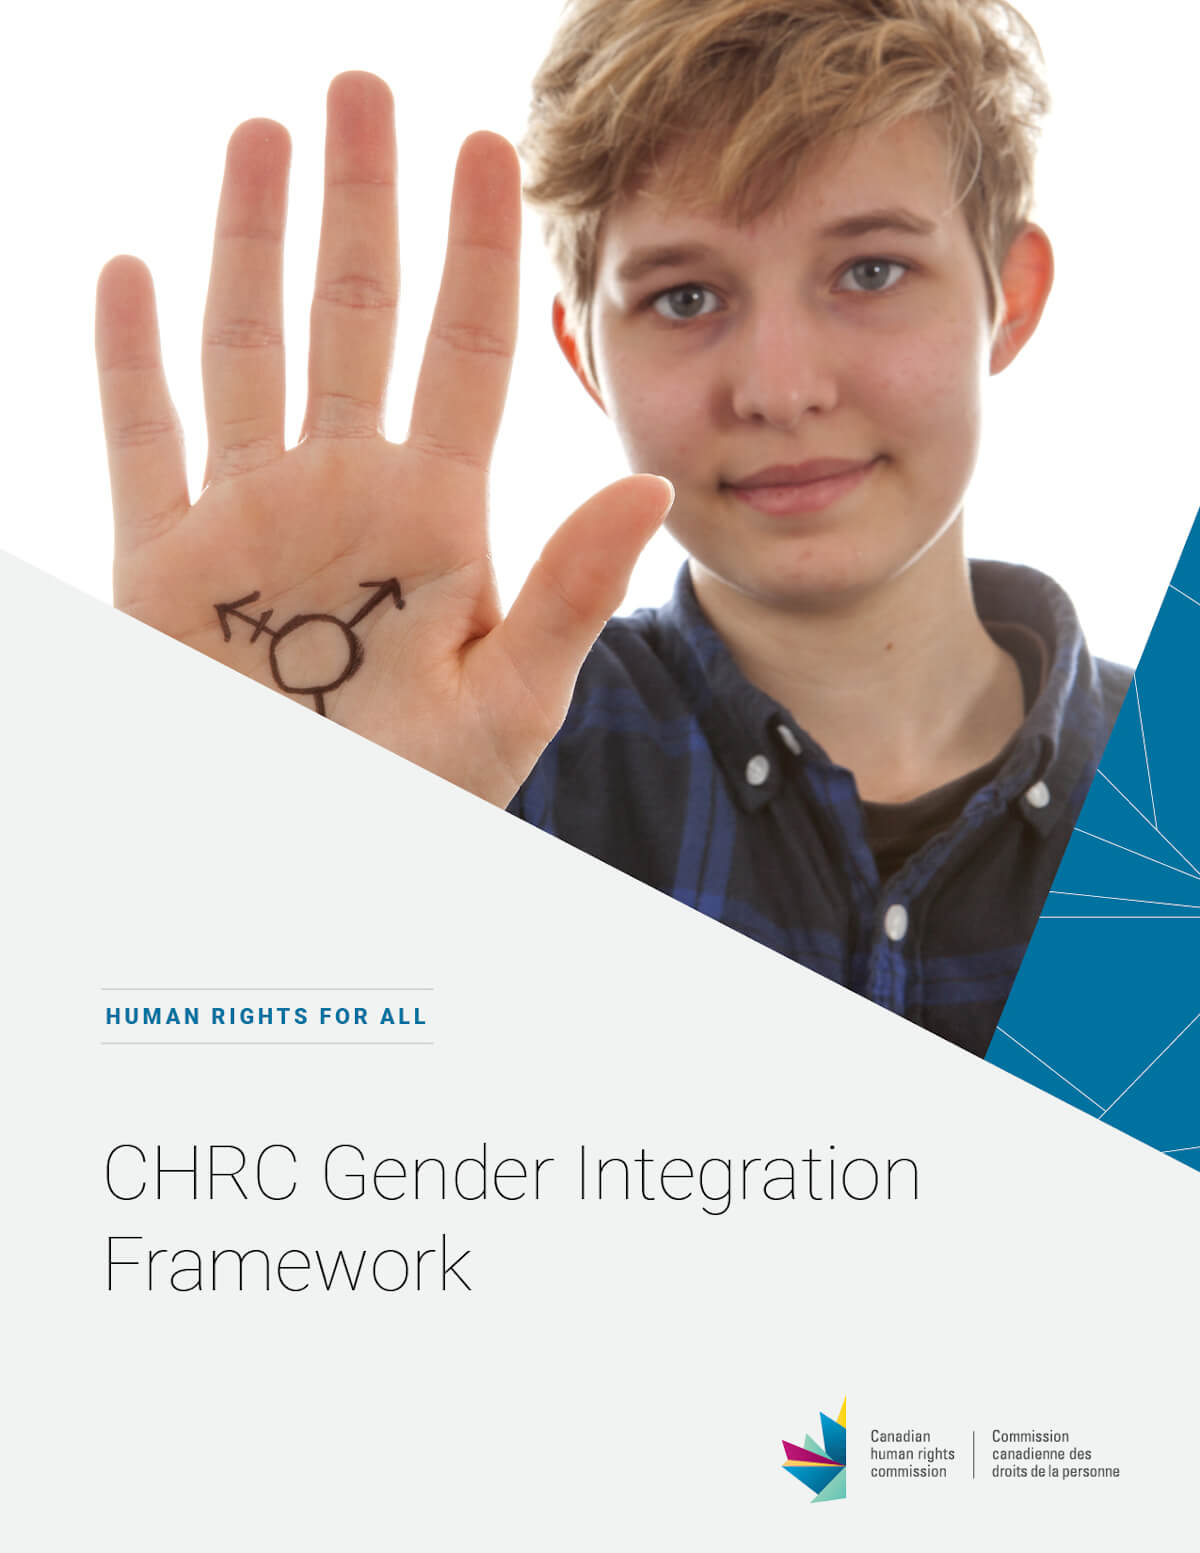 CHRC’s Gender Integration Framework